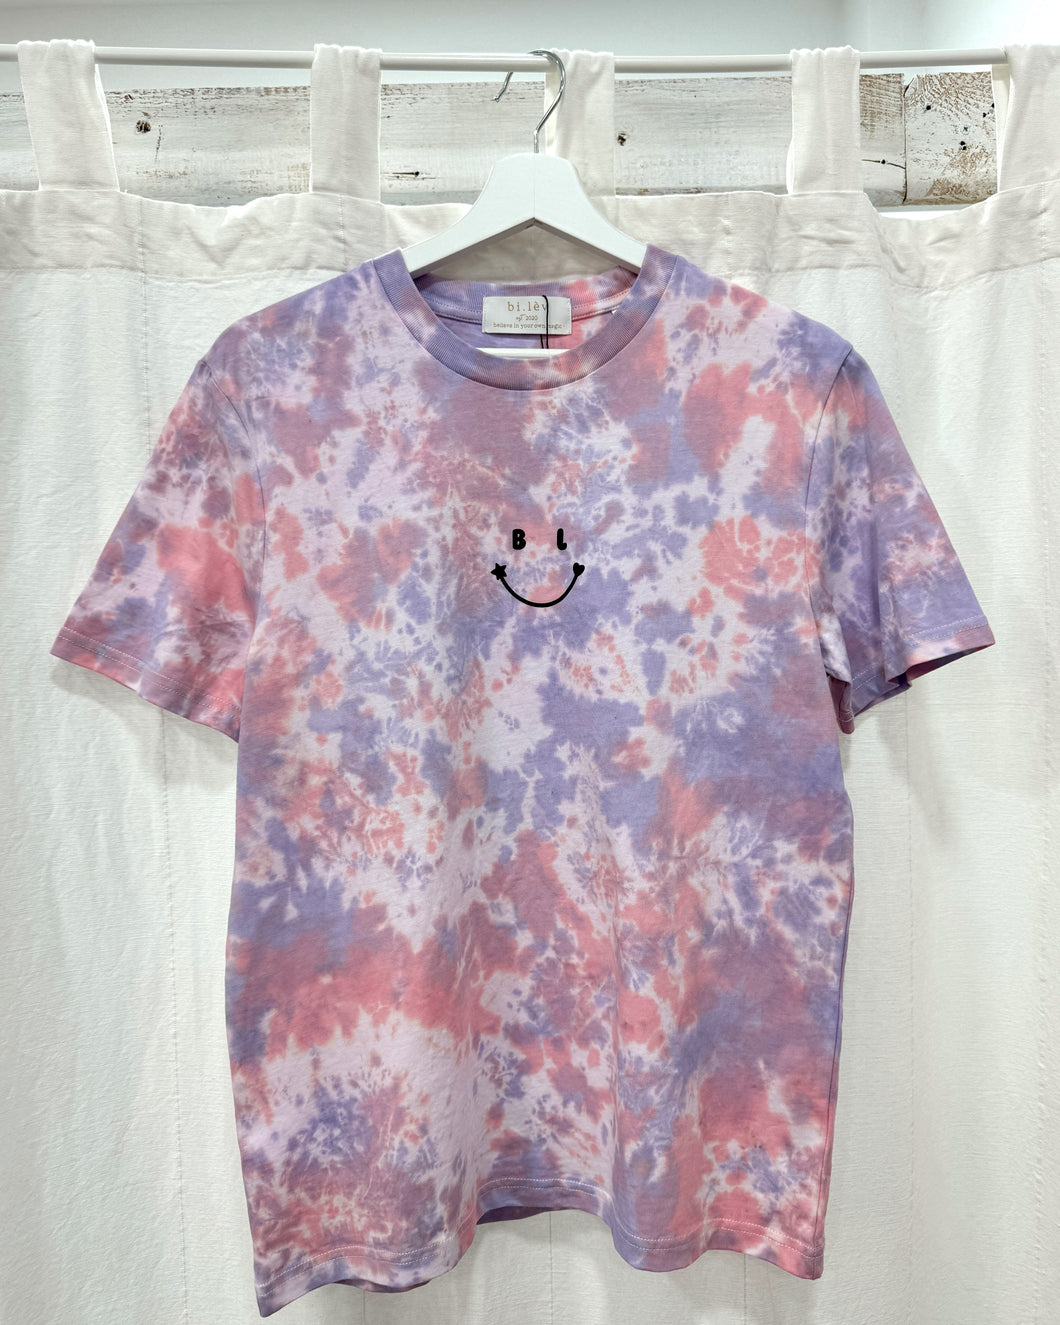 BL TROPICAL SUNSET - Tie Dye Organic Cotton T-shirt